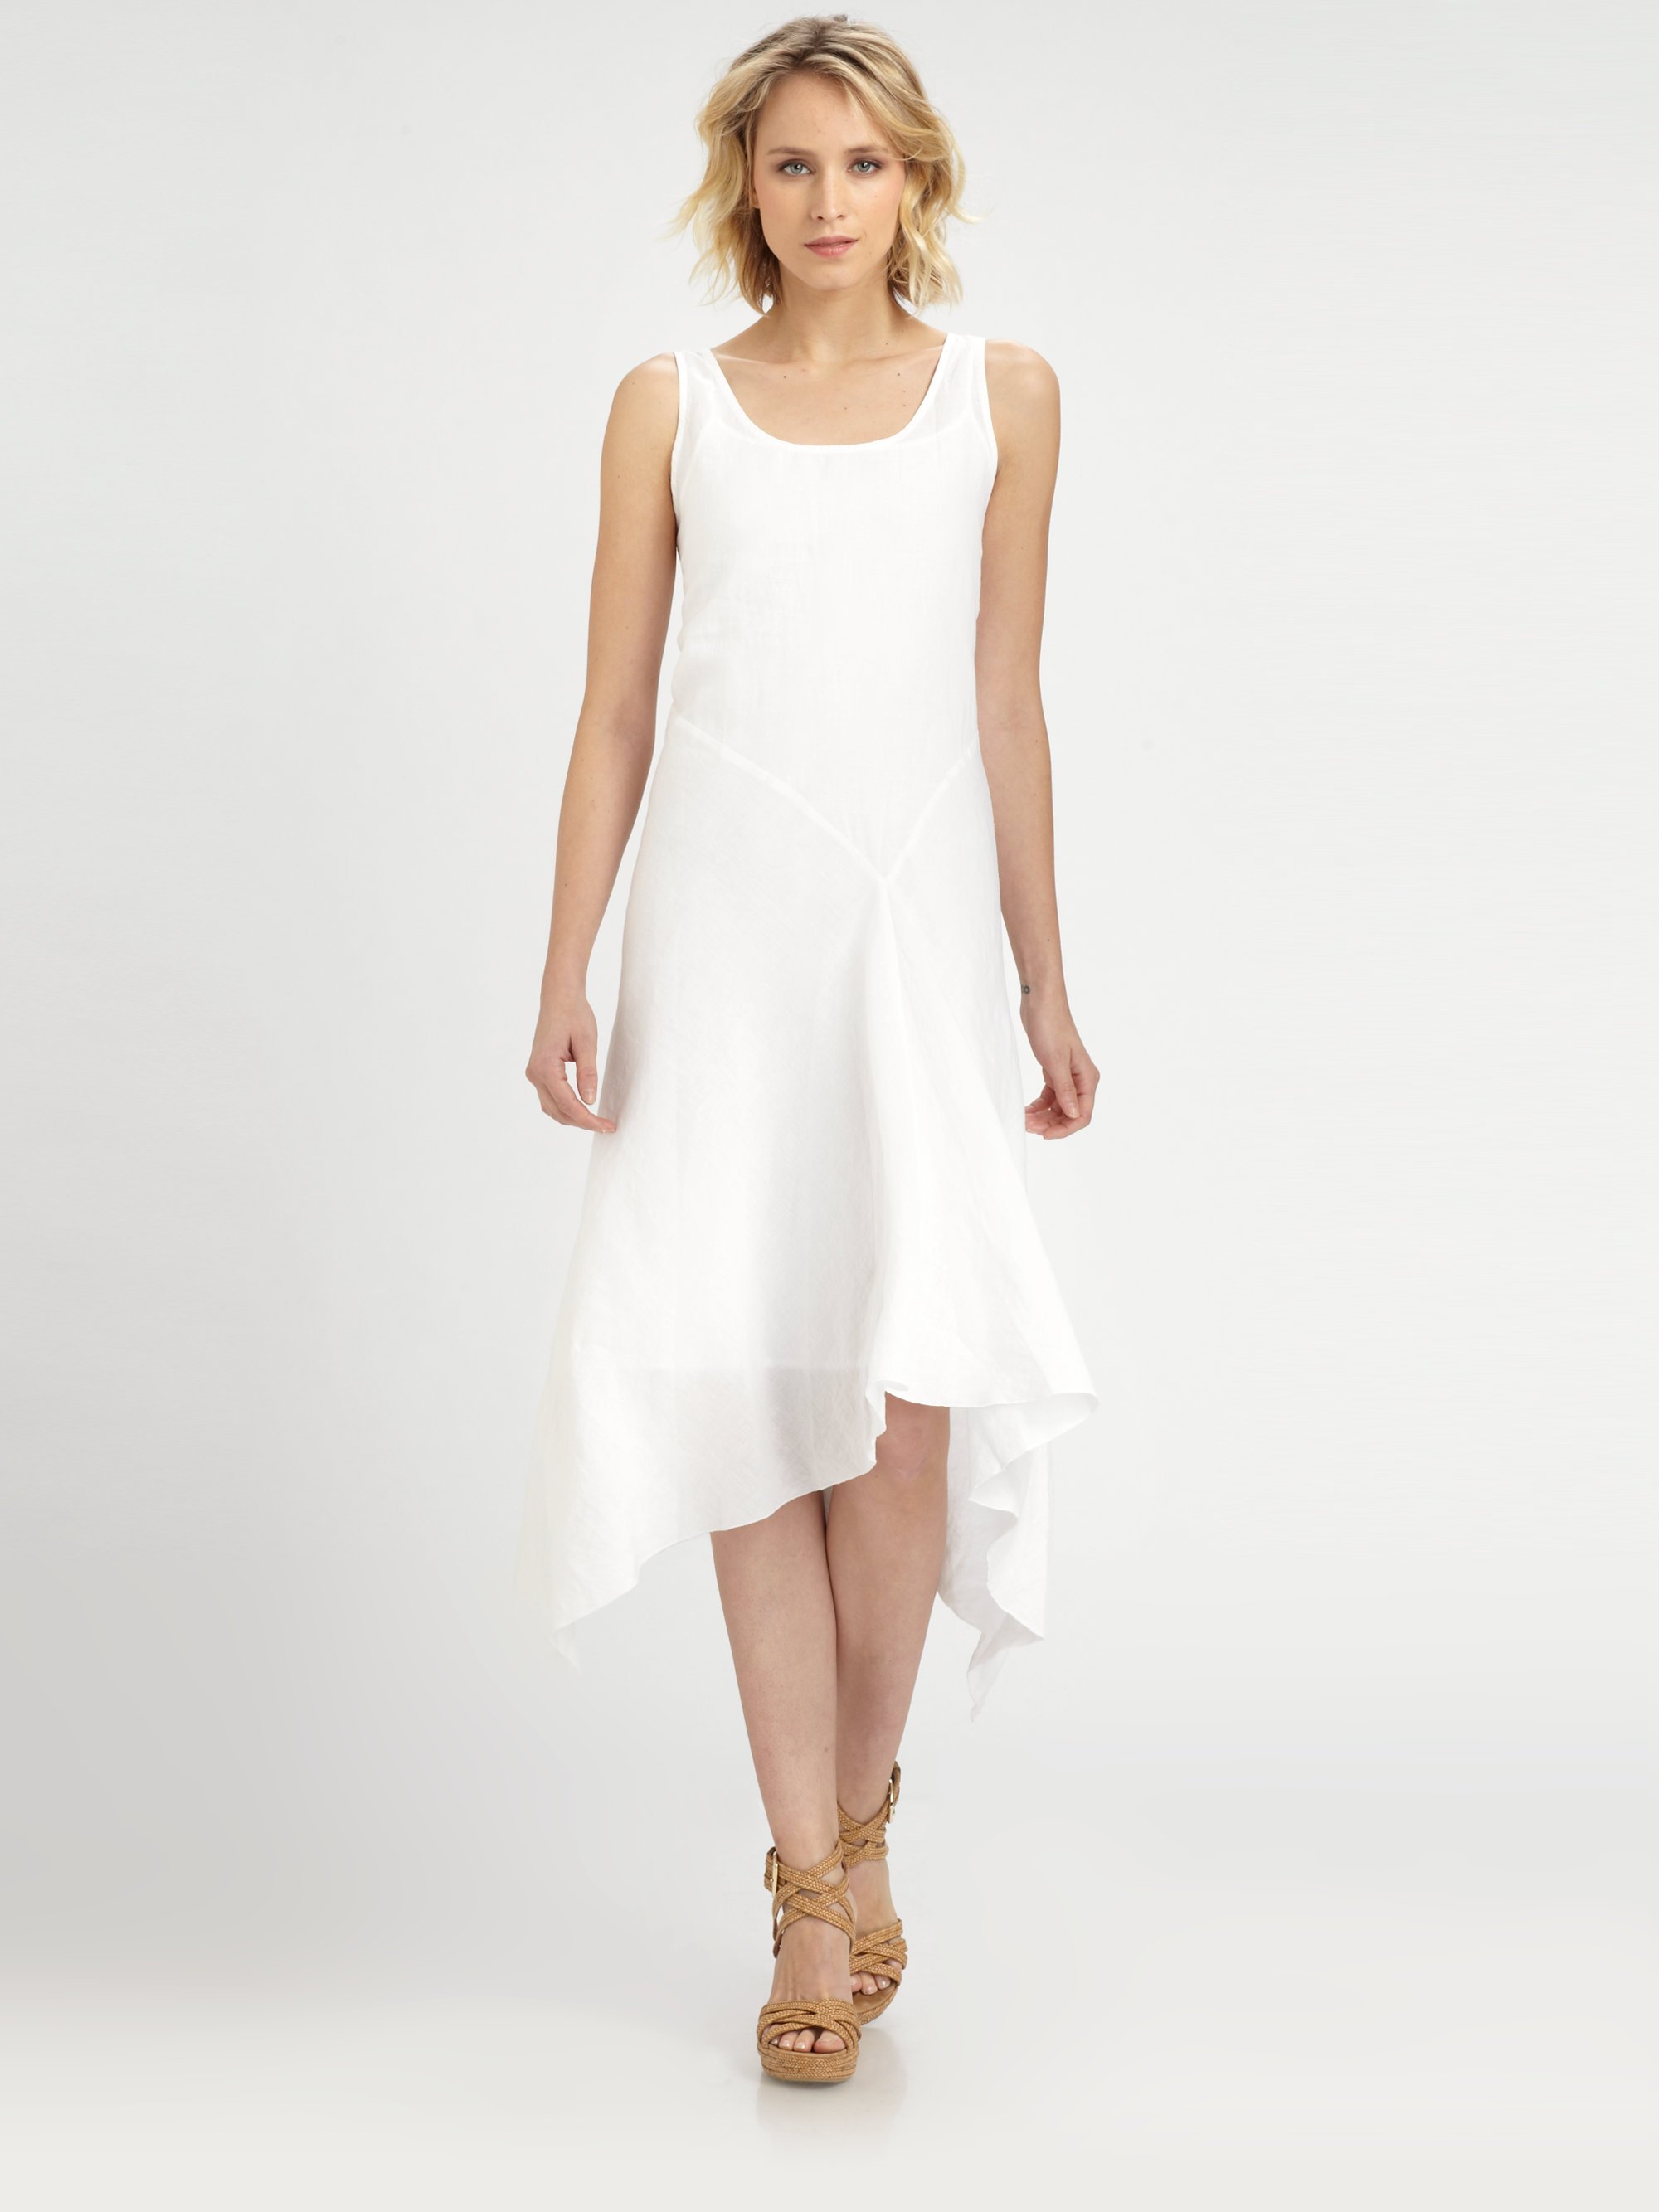 Eileen Fisher wedding attire | Dresses Images 2022